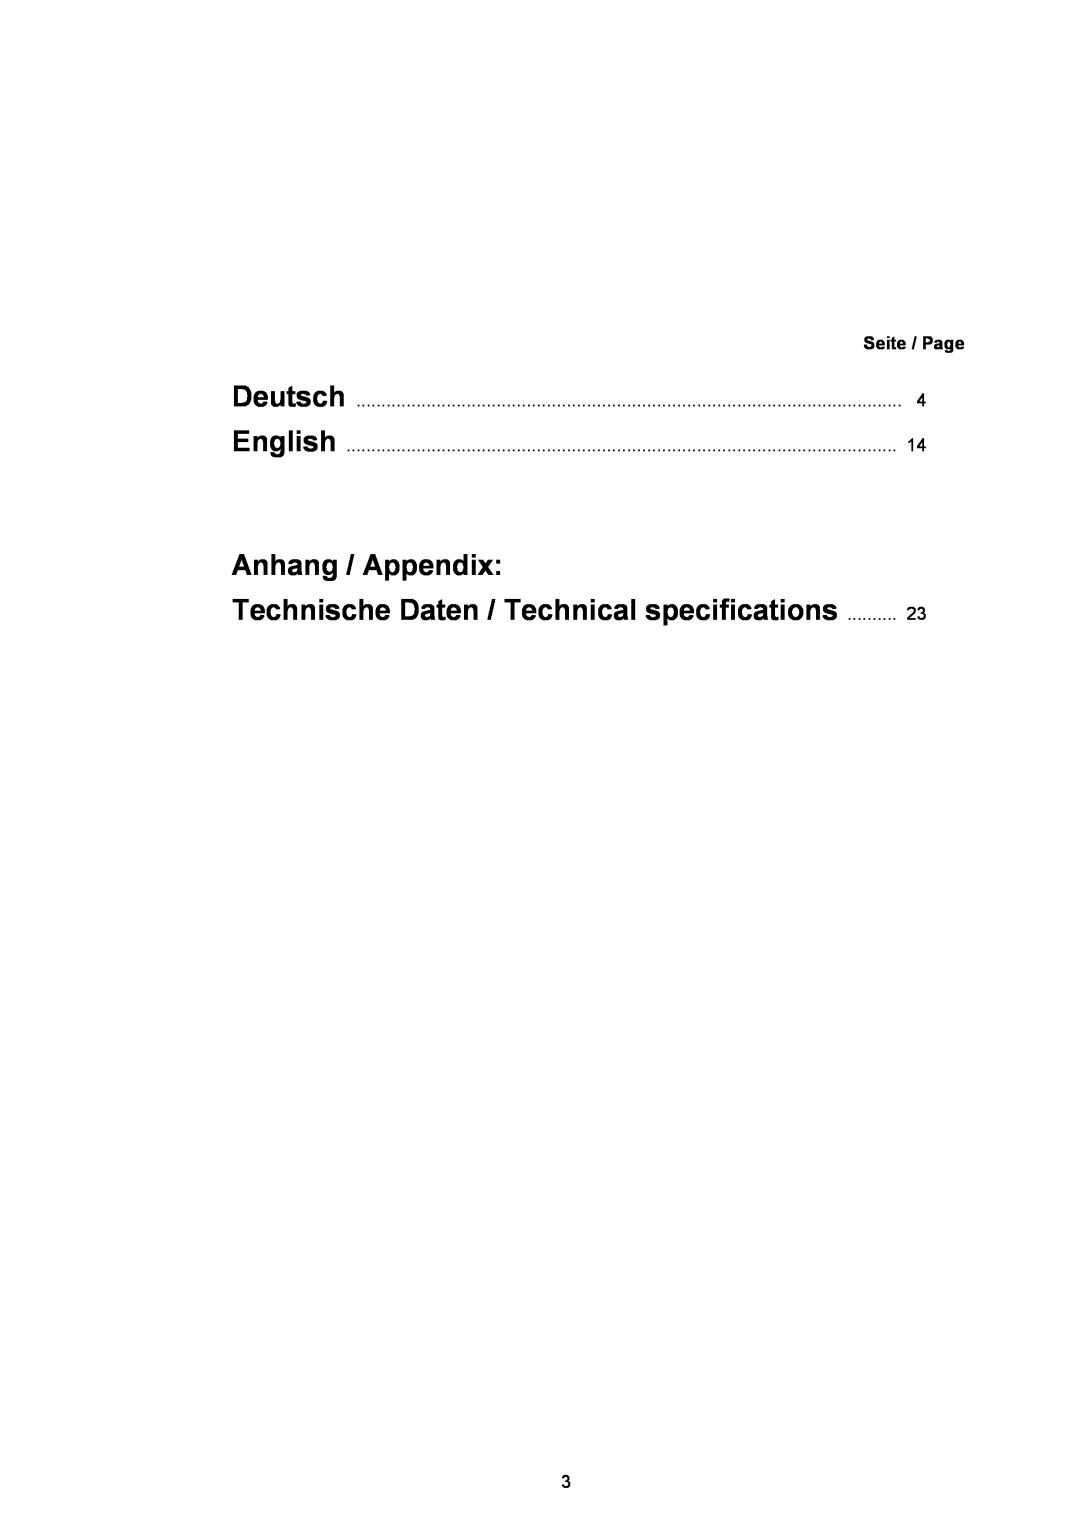 T+A Elektroakustik AE 14 Deutsch, Anhang / Appendix, Technische Daten / Technical specifications, Seite / Page, English 